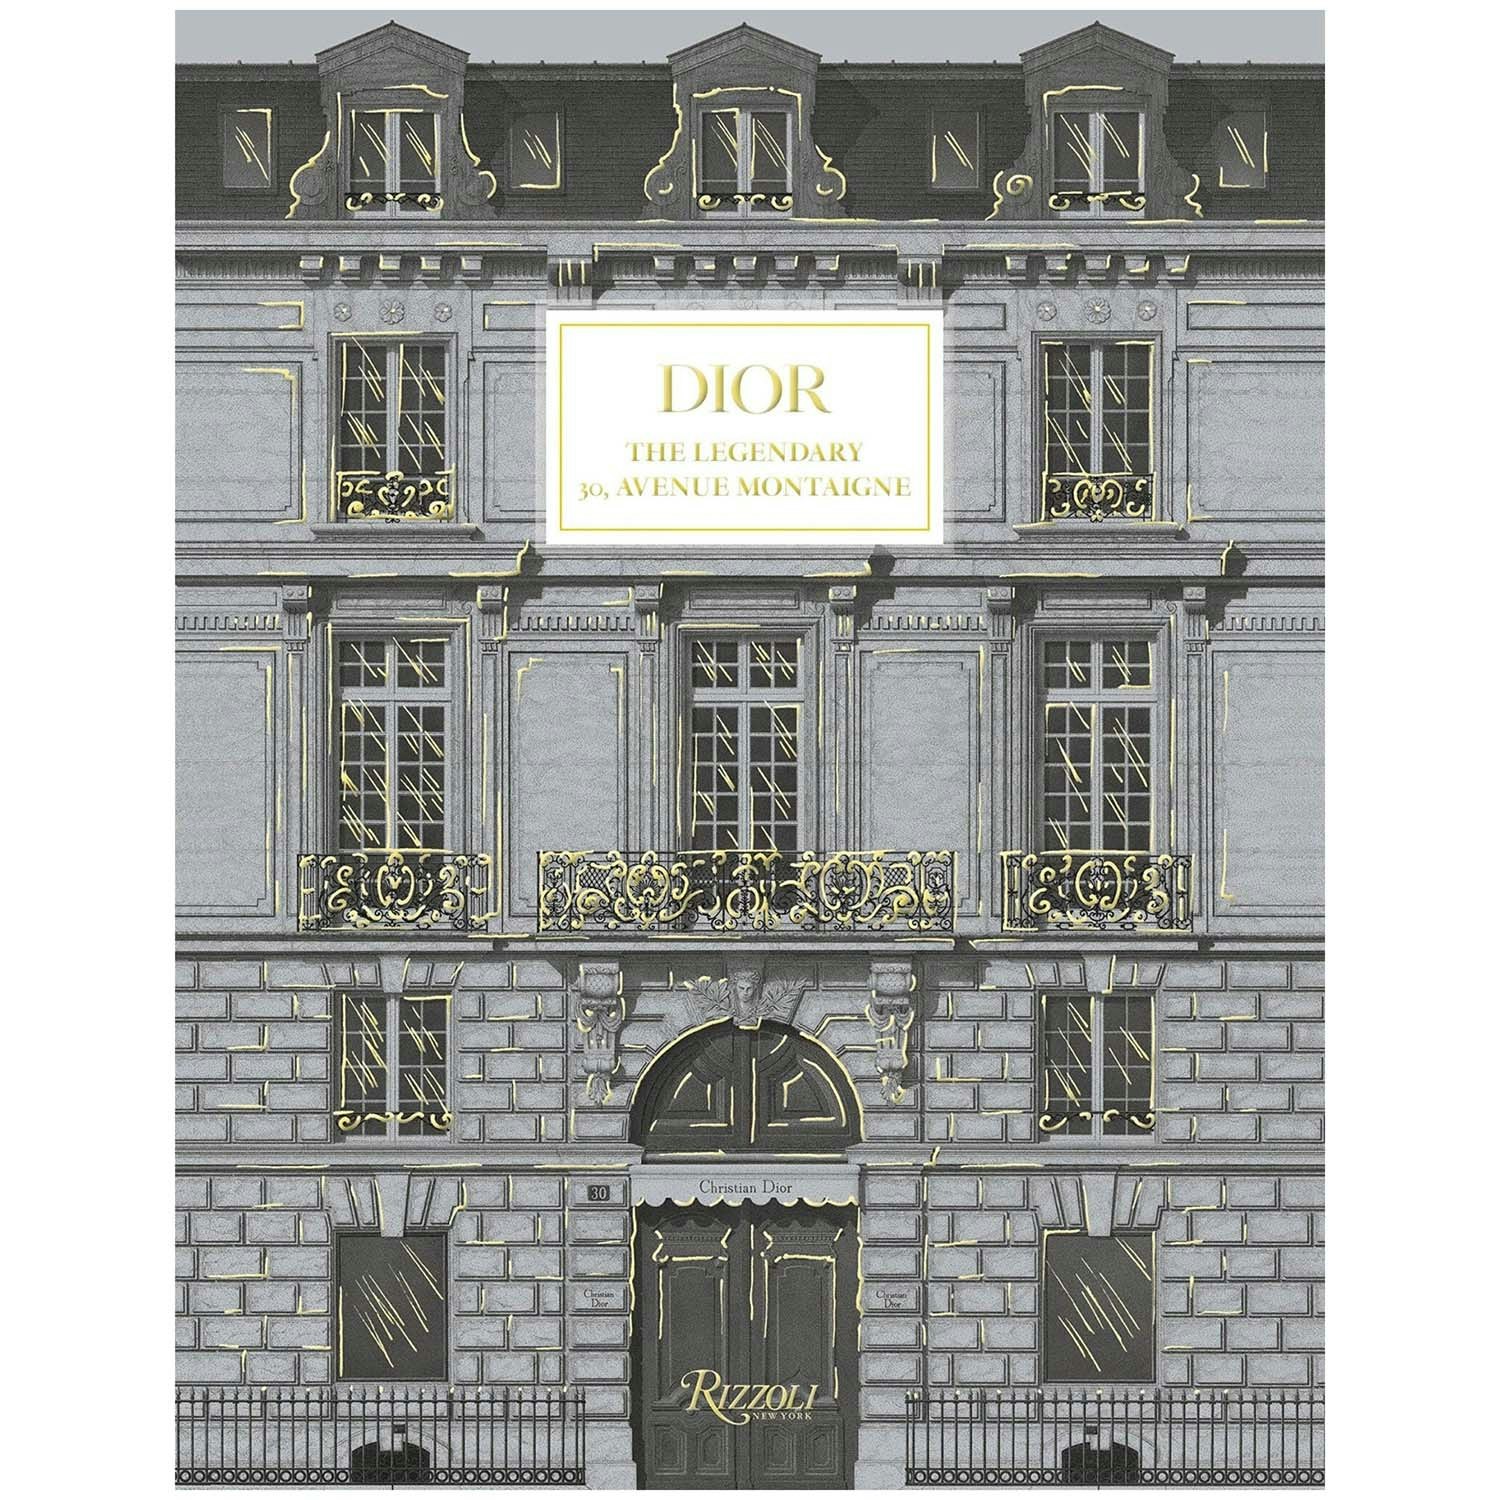 New Mags-Dior: The Legendary 30, Avenue Montaigne Bog